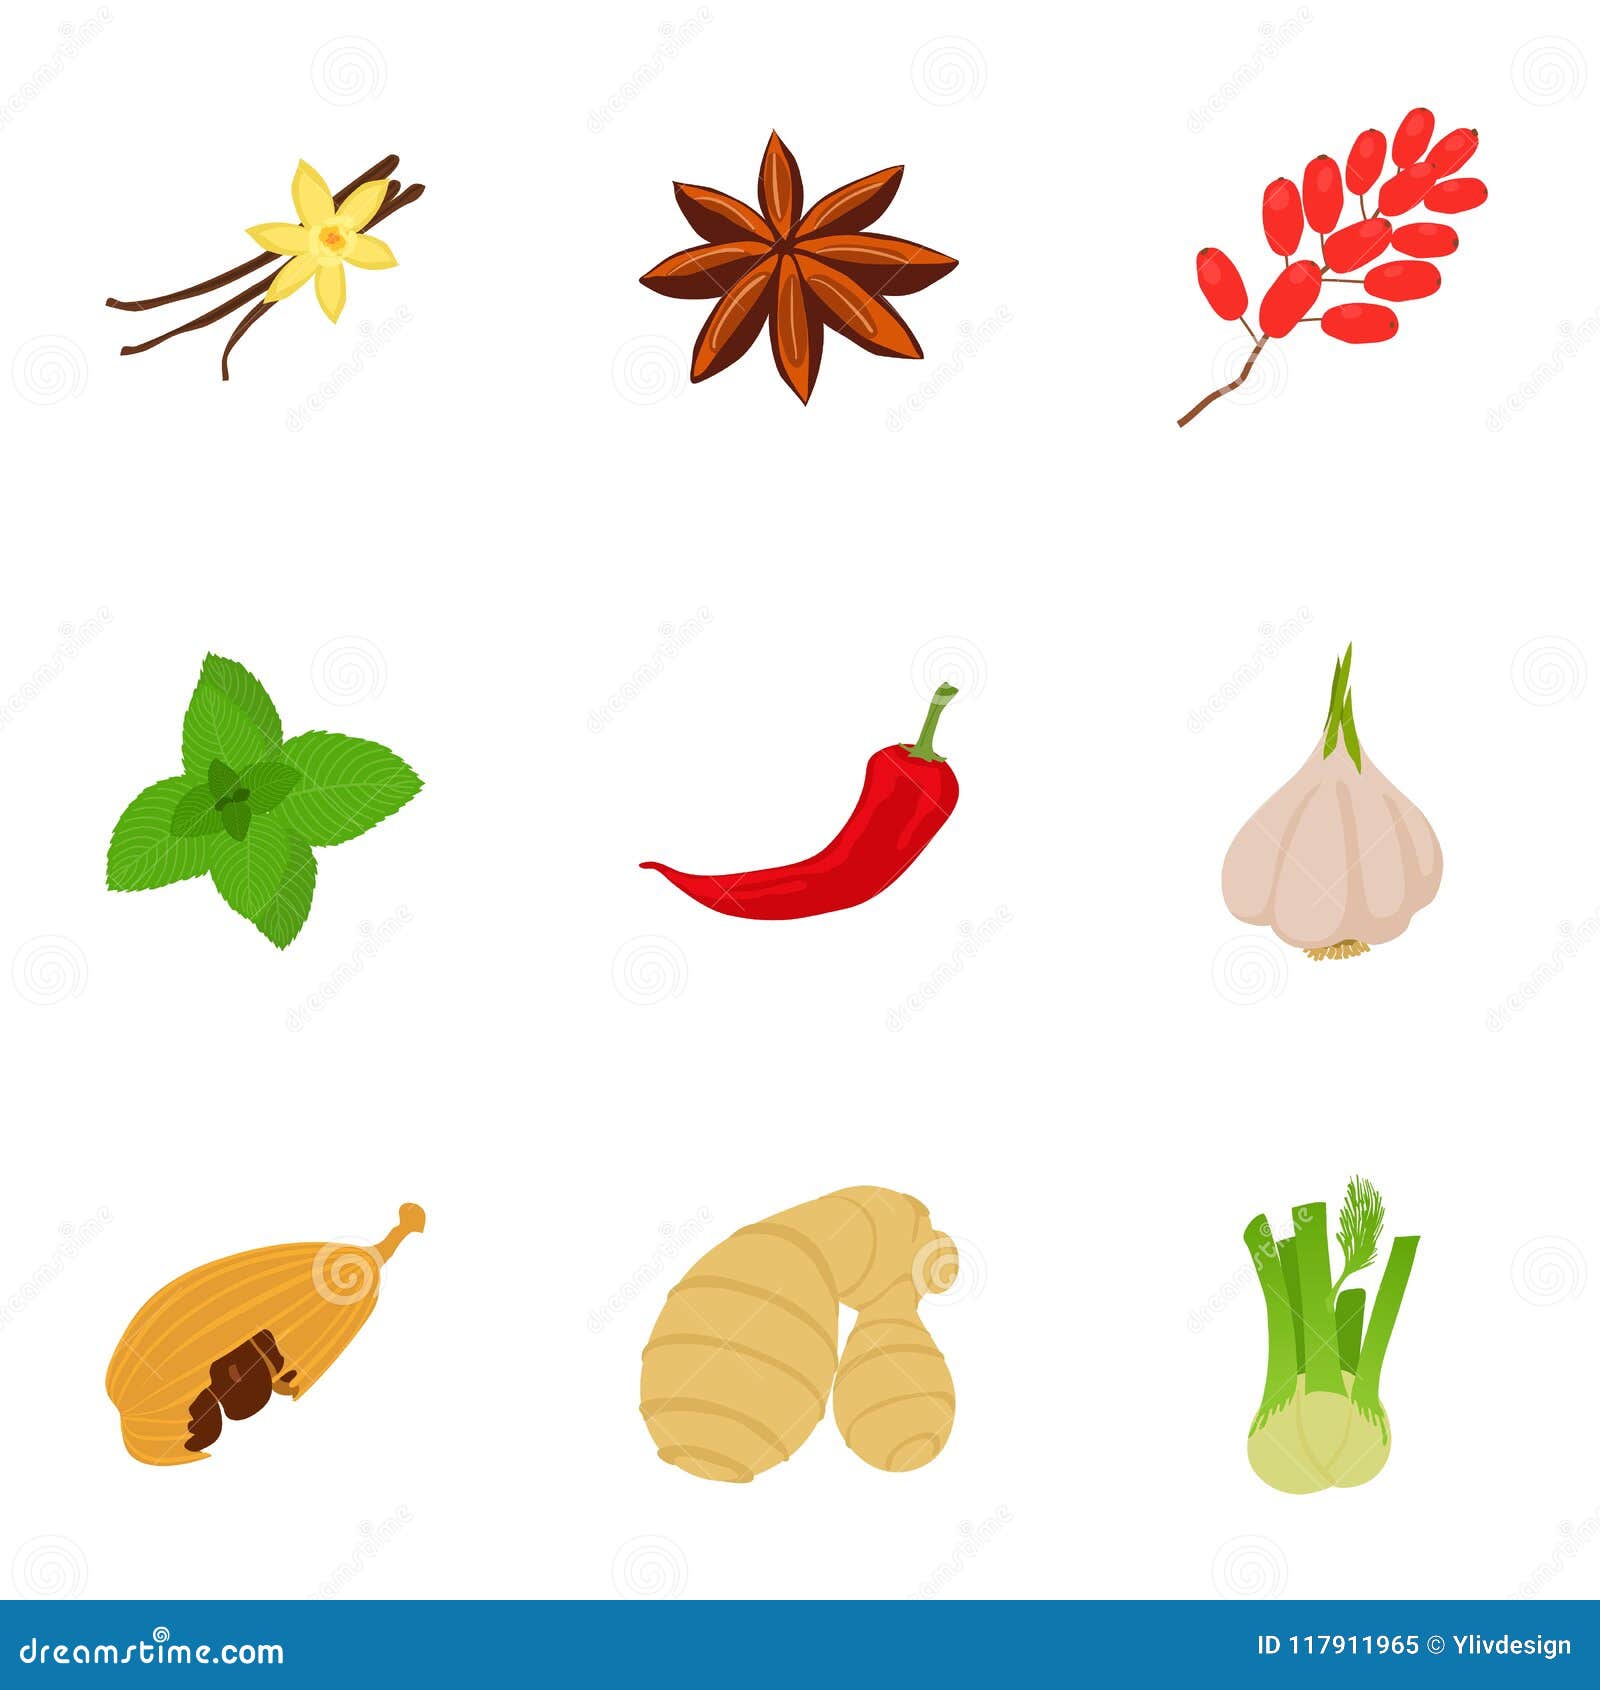 herbage icons set, cartoon style